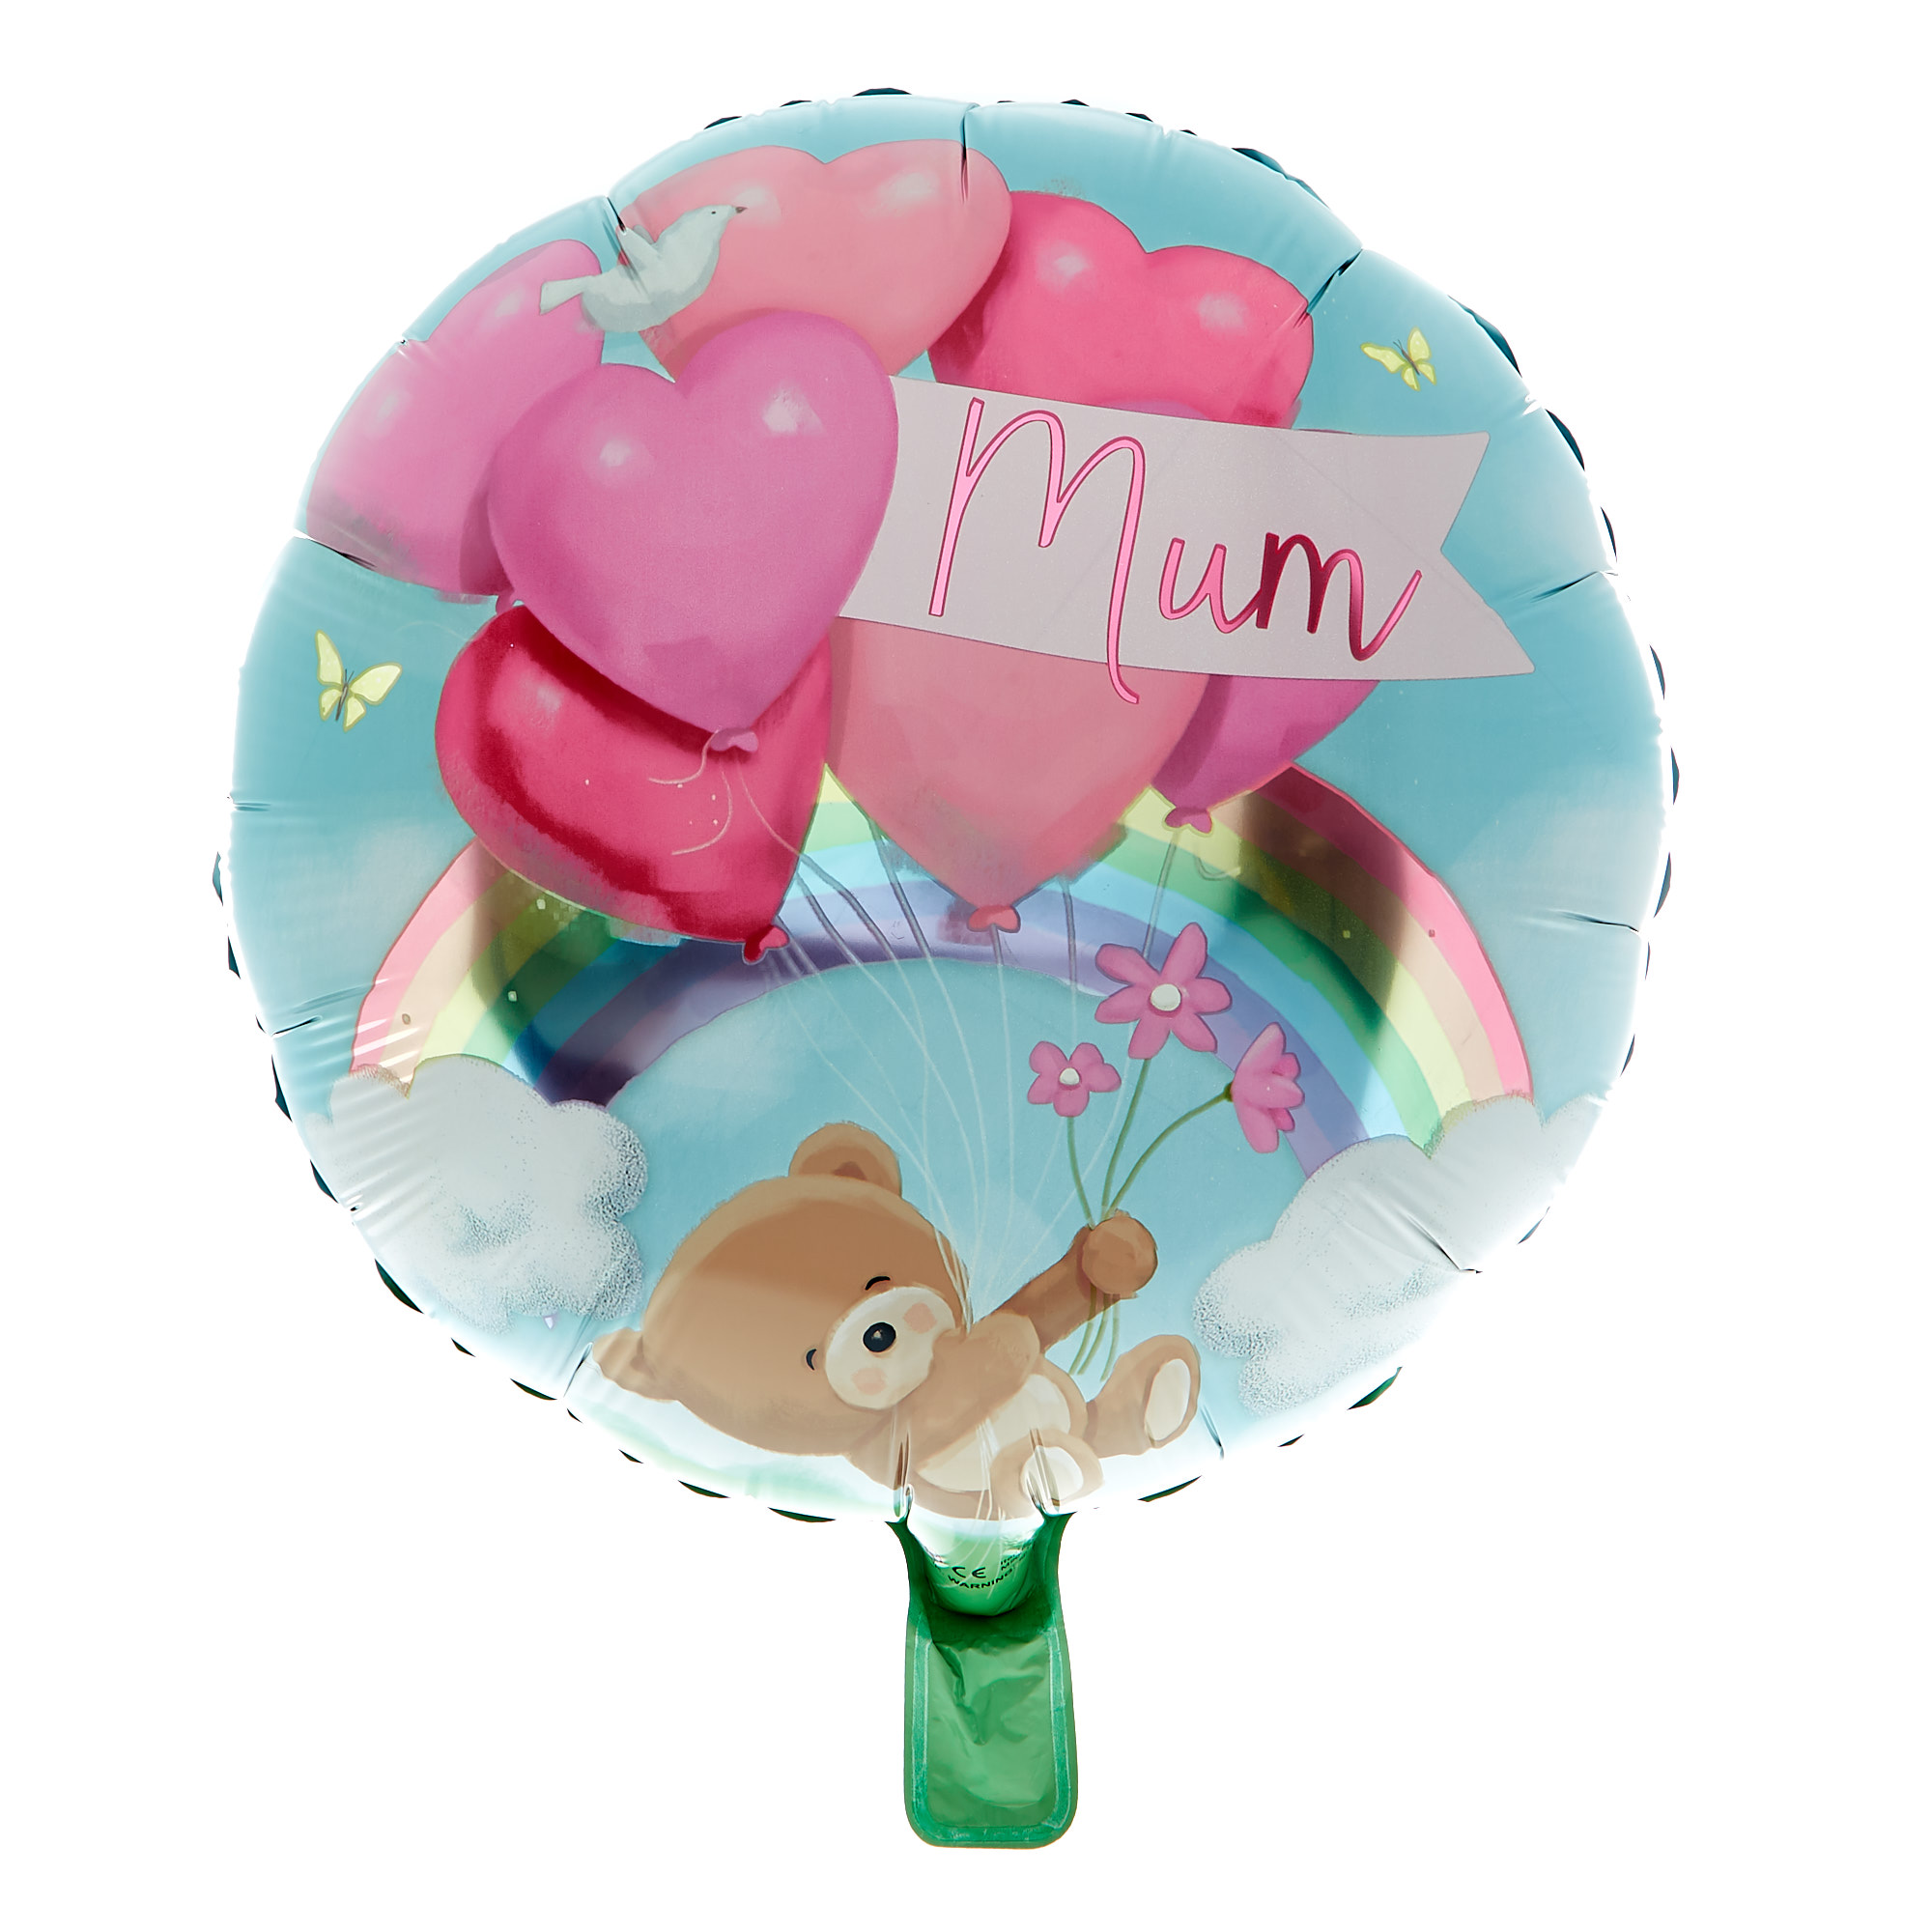 Hugs Bear Mum Balloon & Lindt Chocolates - FREE GIFT CARD!